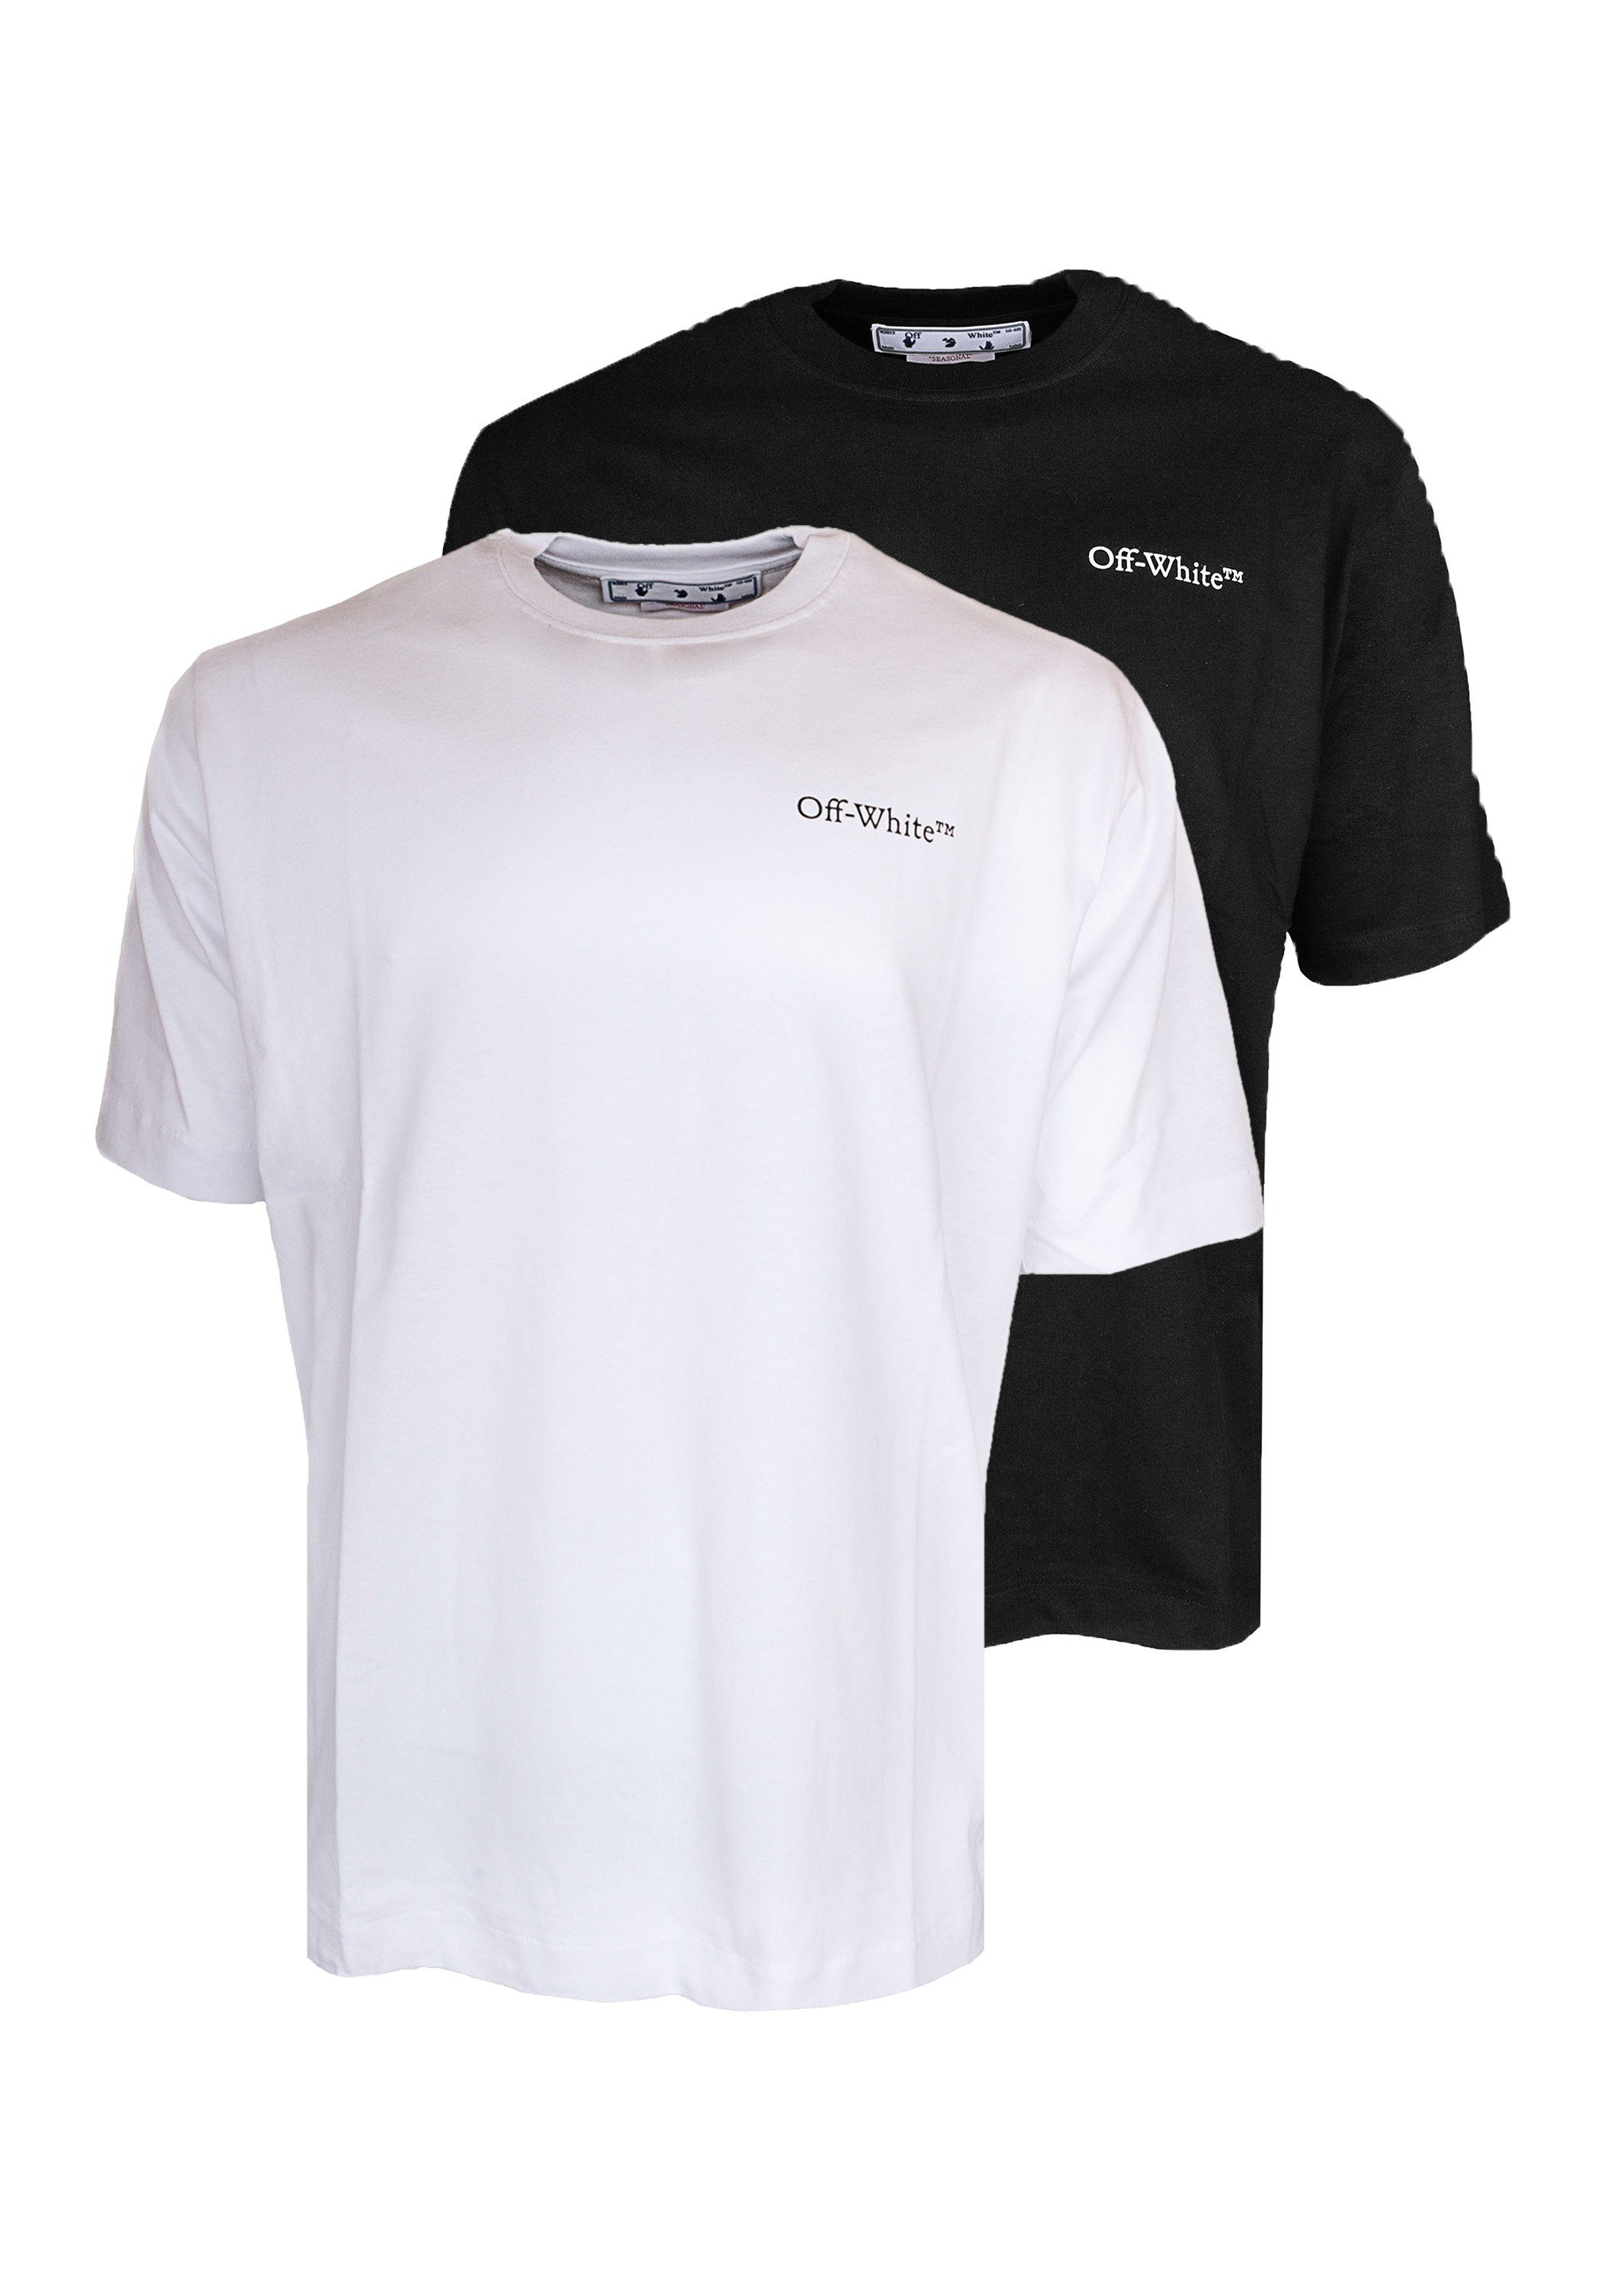 Shirt Caravaggio White OFF-WHITE Herren Off Crowning T-Shirt T-Shirt